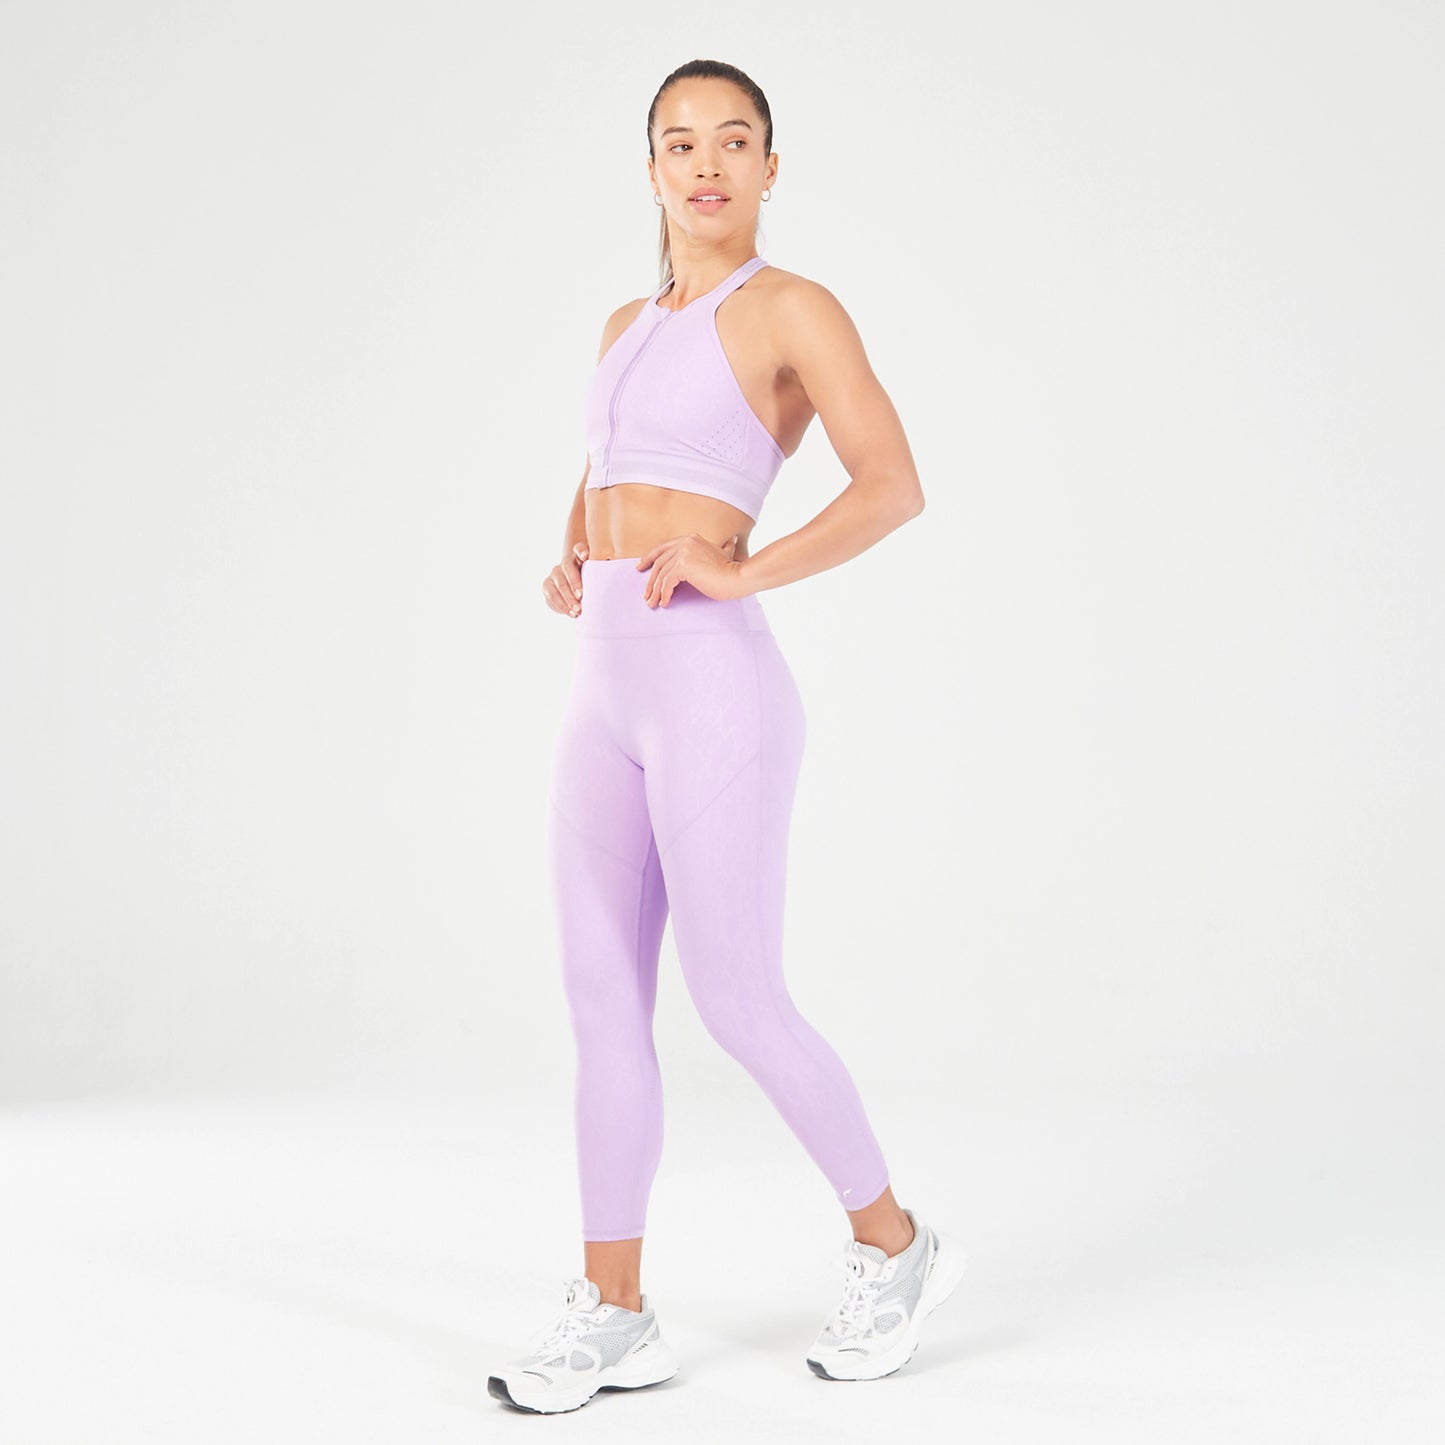 squatwolf-workout-clothes-serpent-7-8-leggings-purple-rose-gym-leggings-for-women